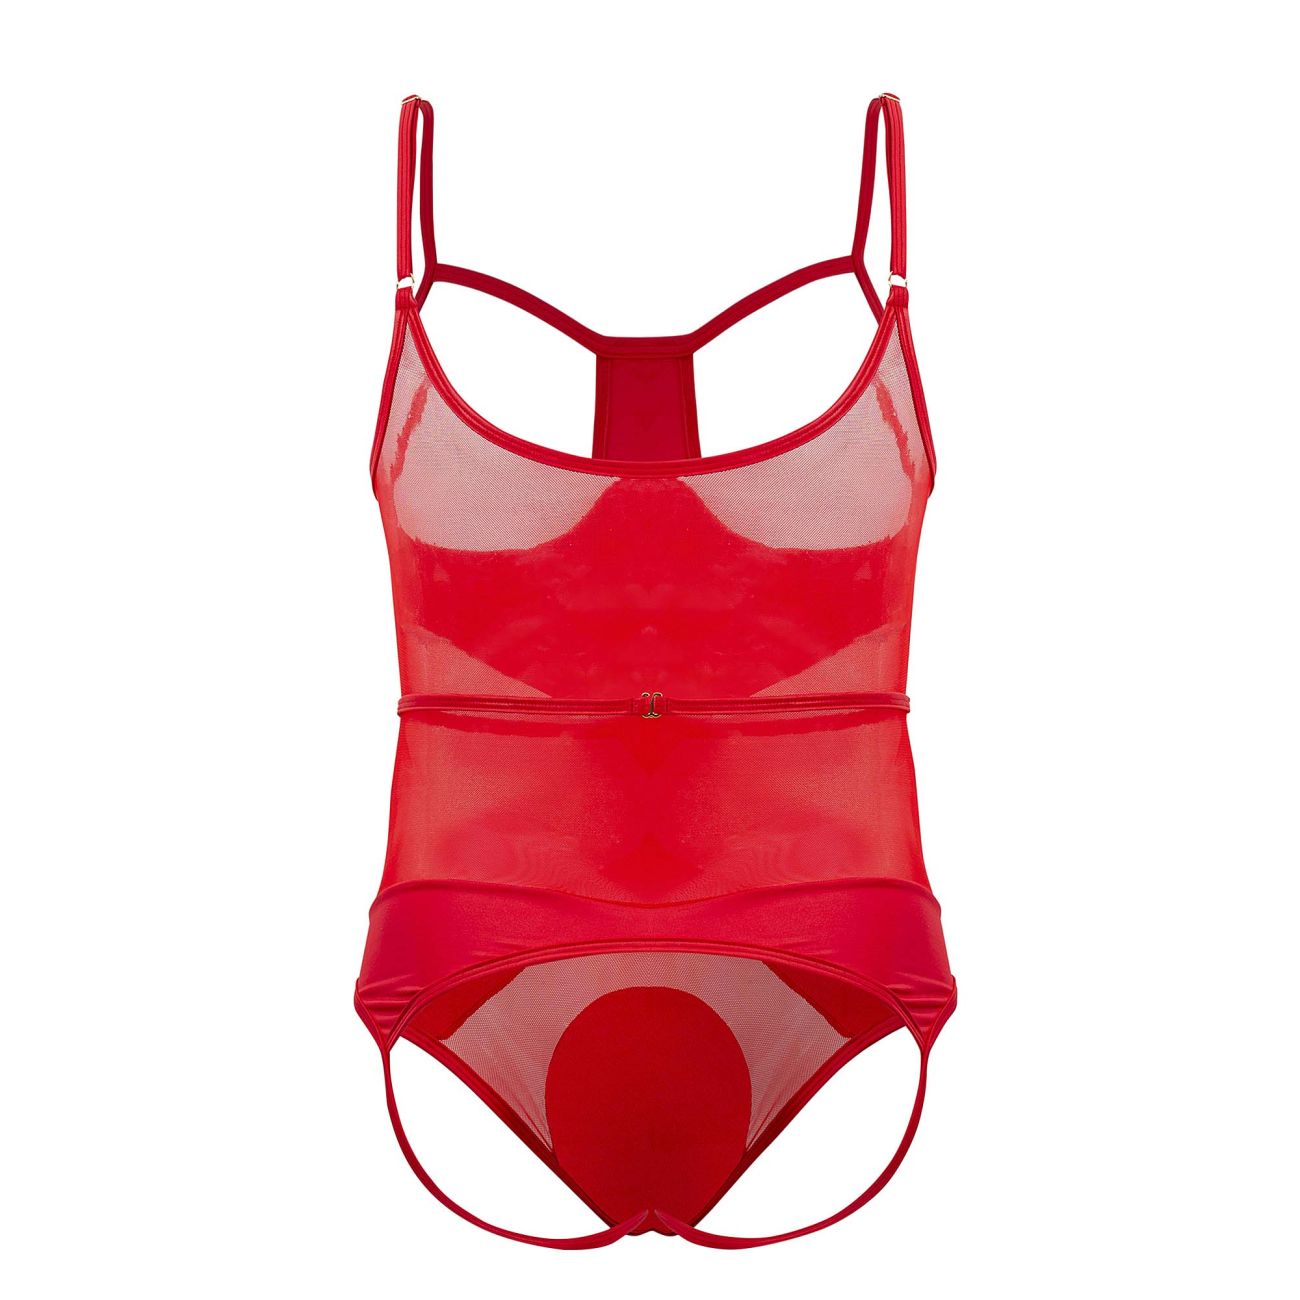 JCSTK - CandyMan 99670 Harness Bodysuit Red